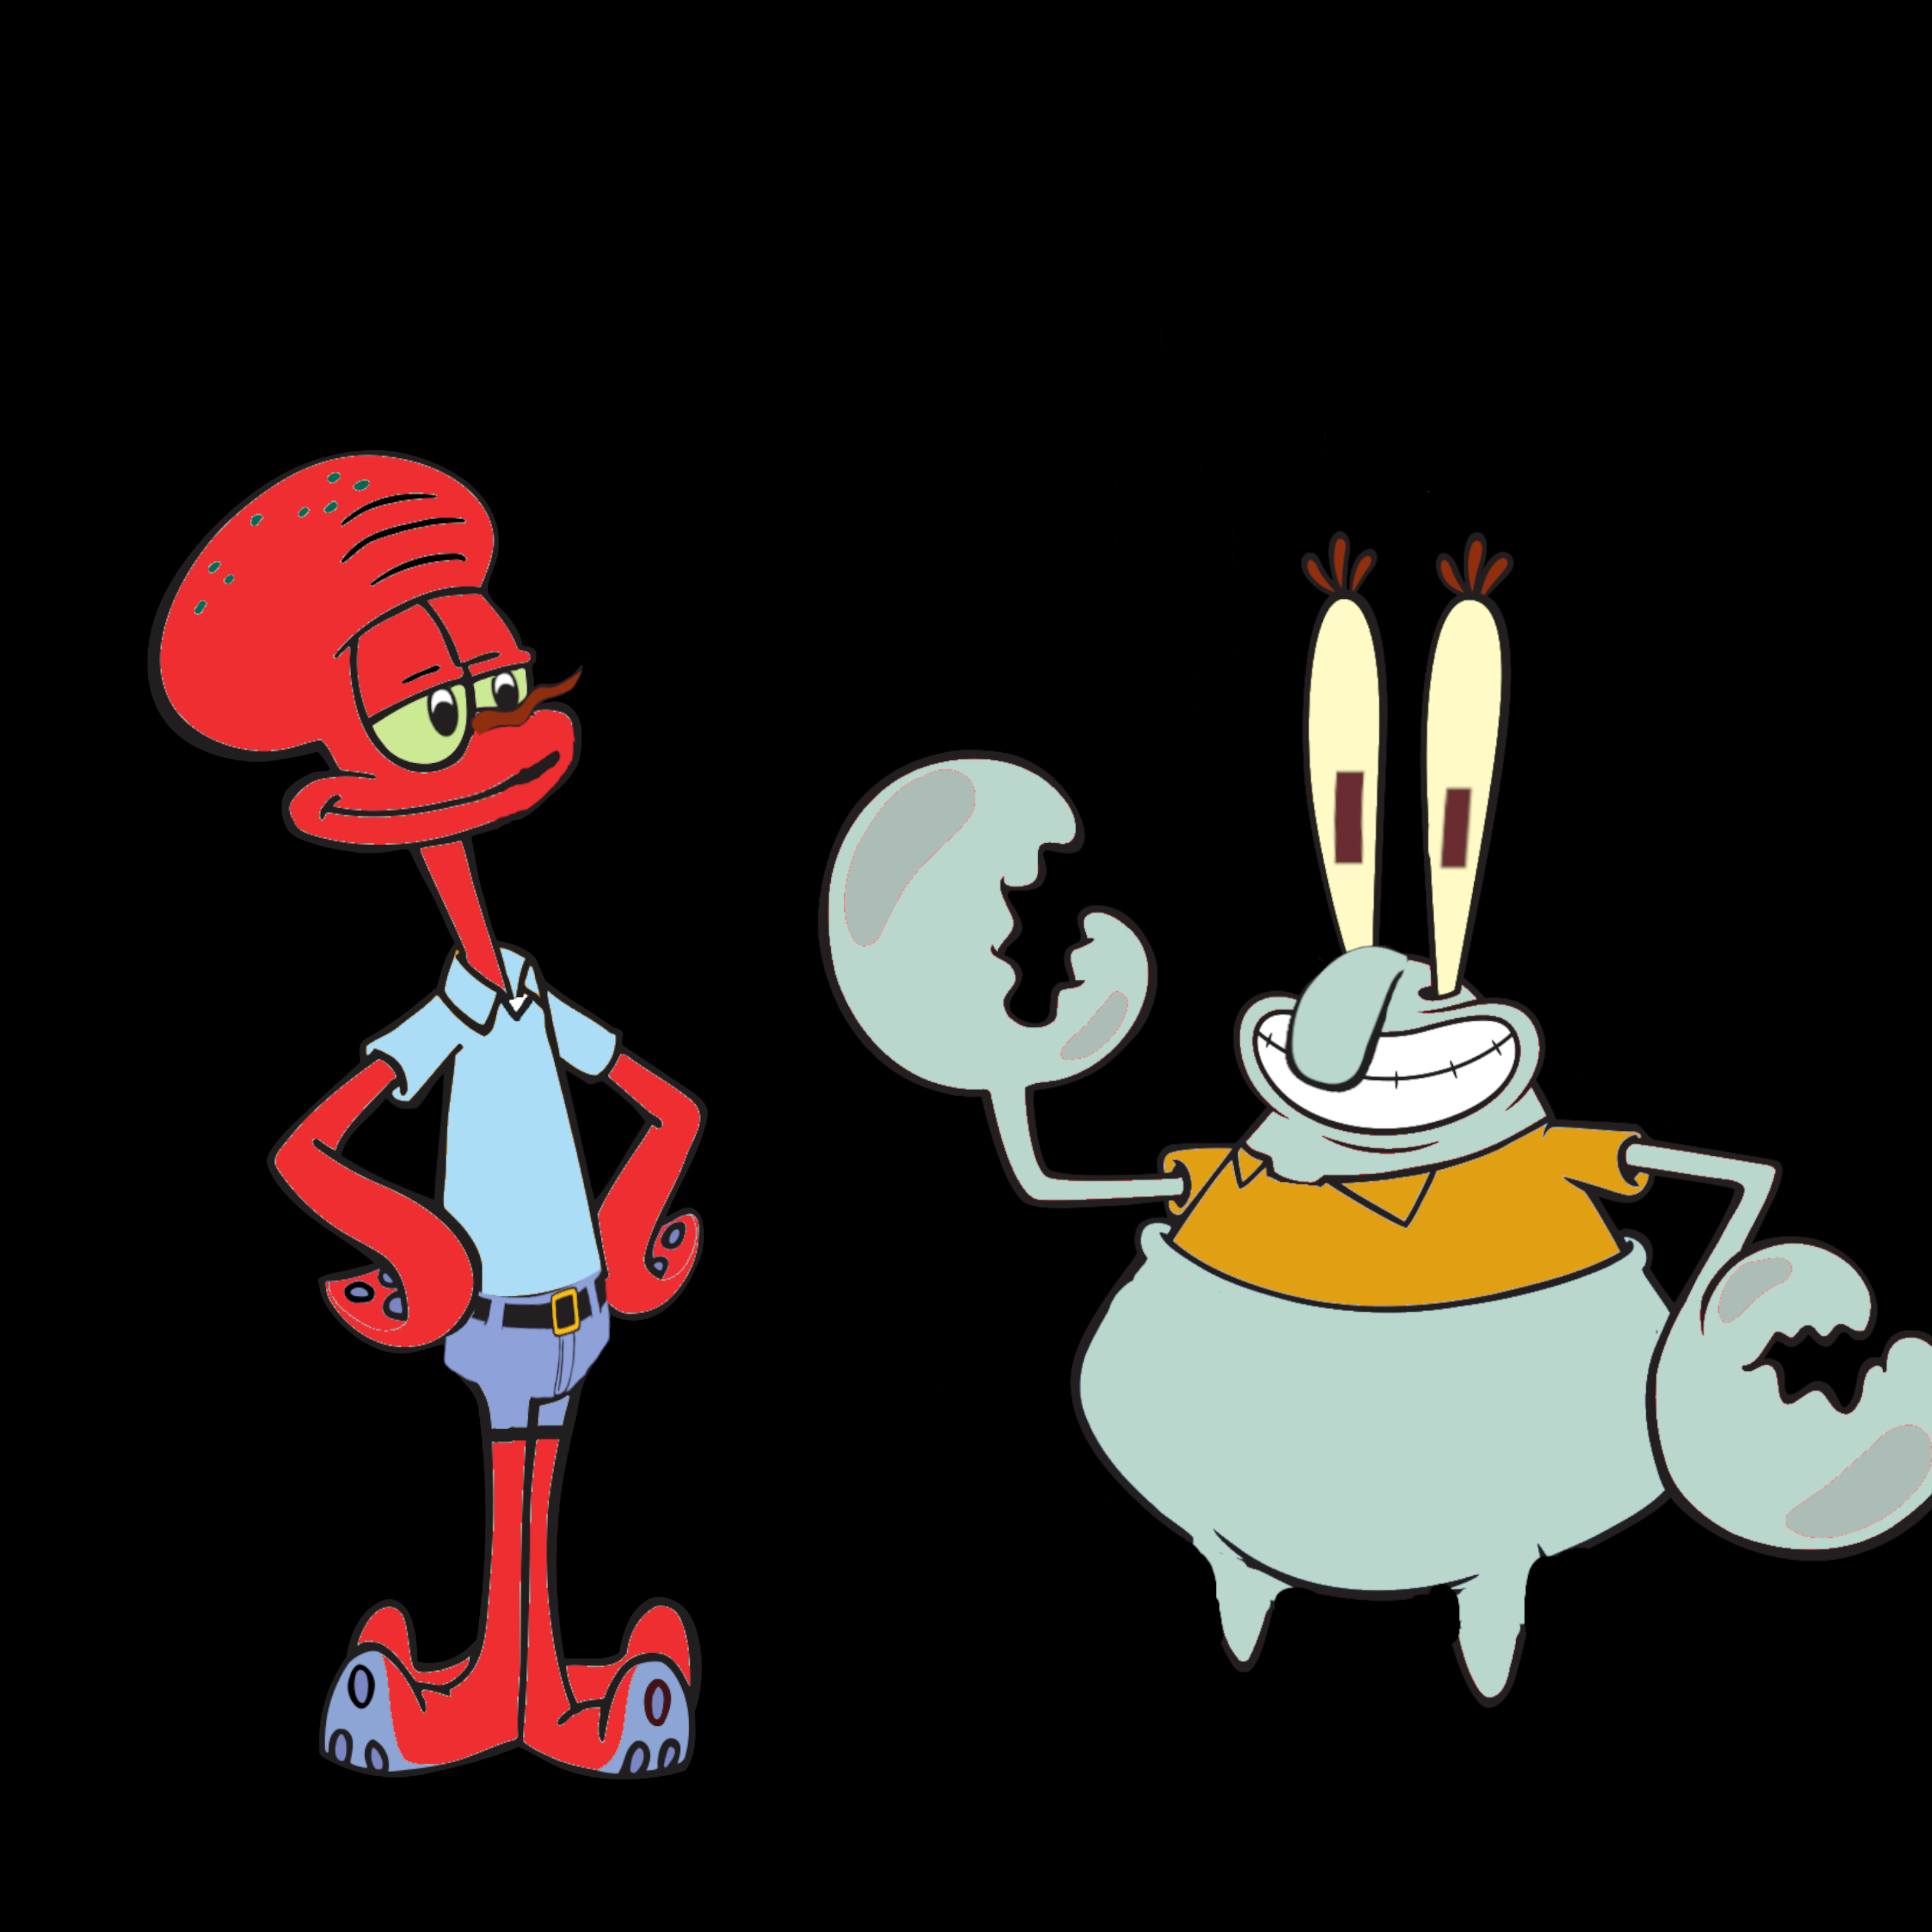 squidward and mr krabs